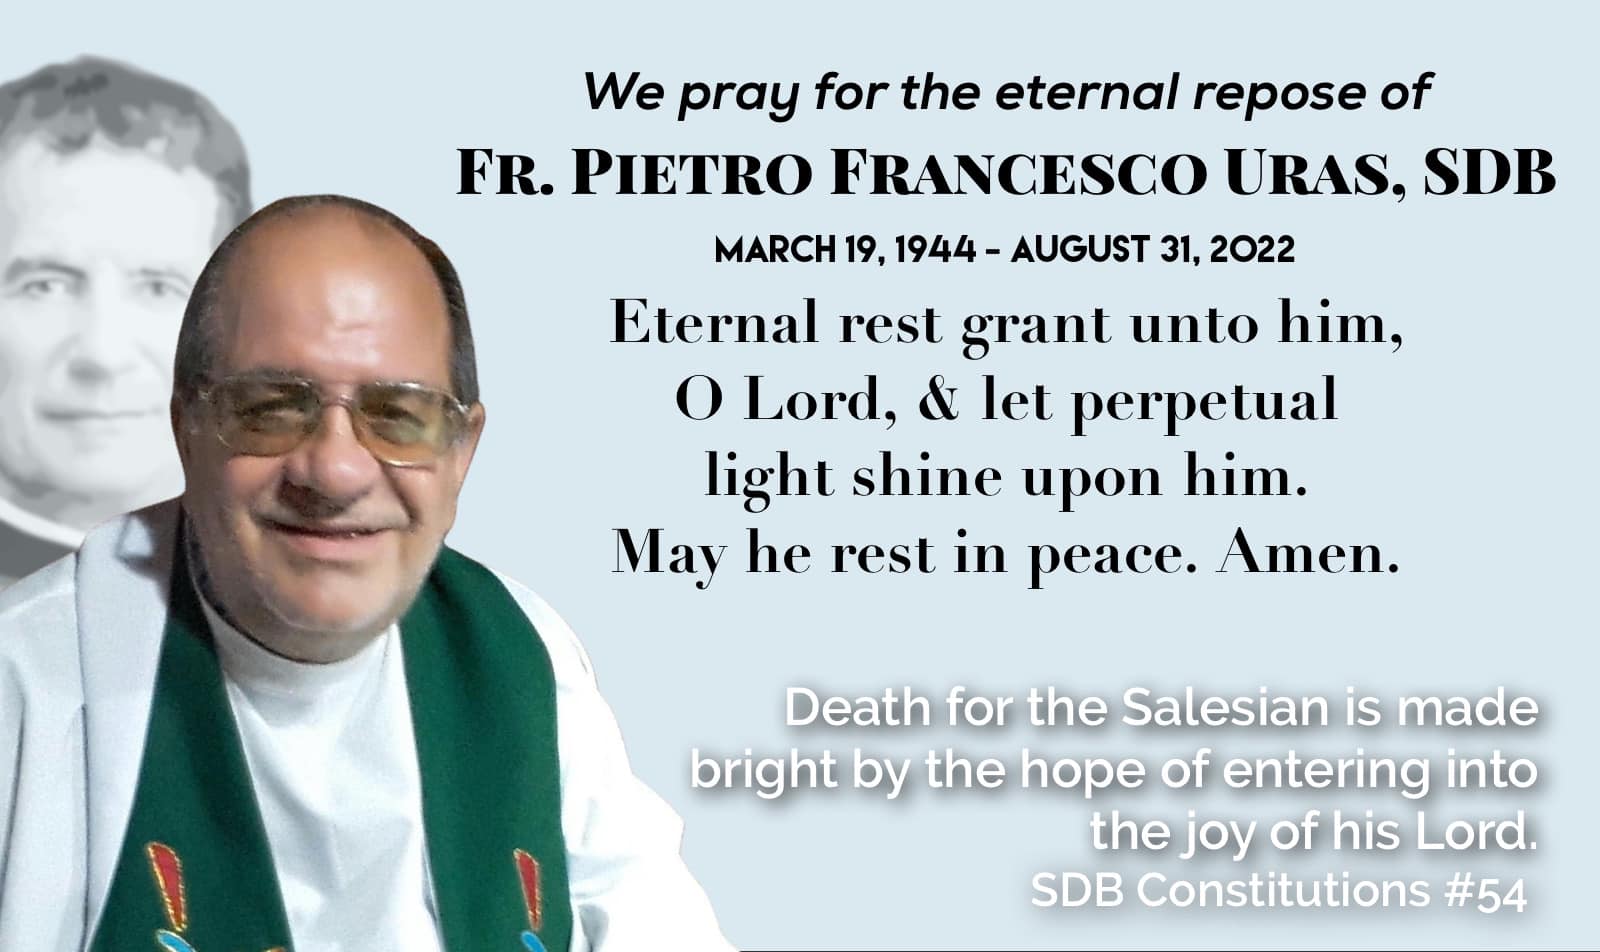 Thank you, Fr. Franco!